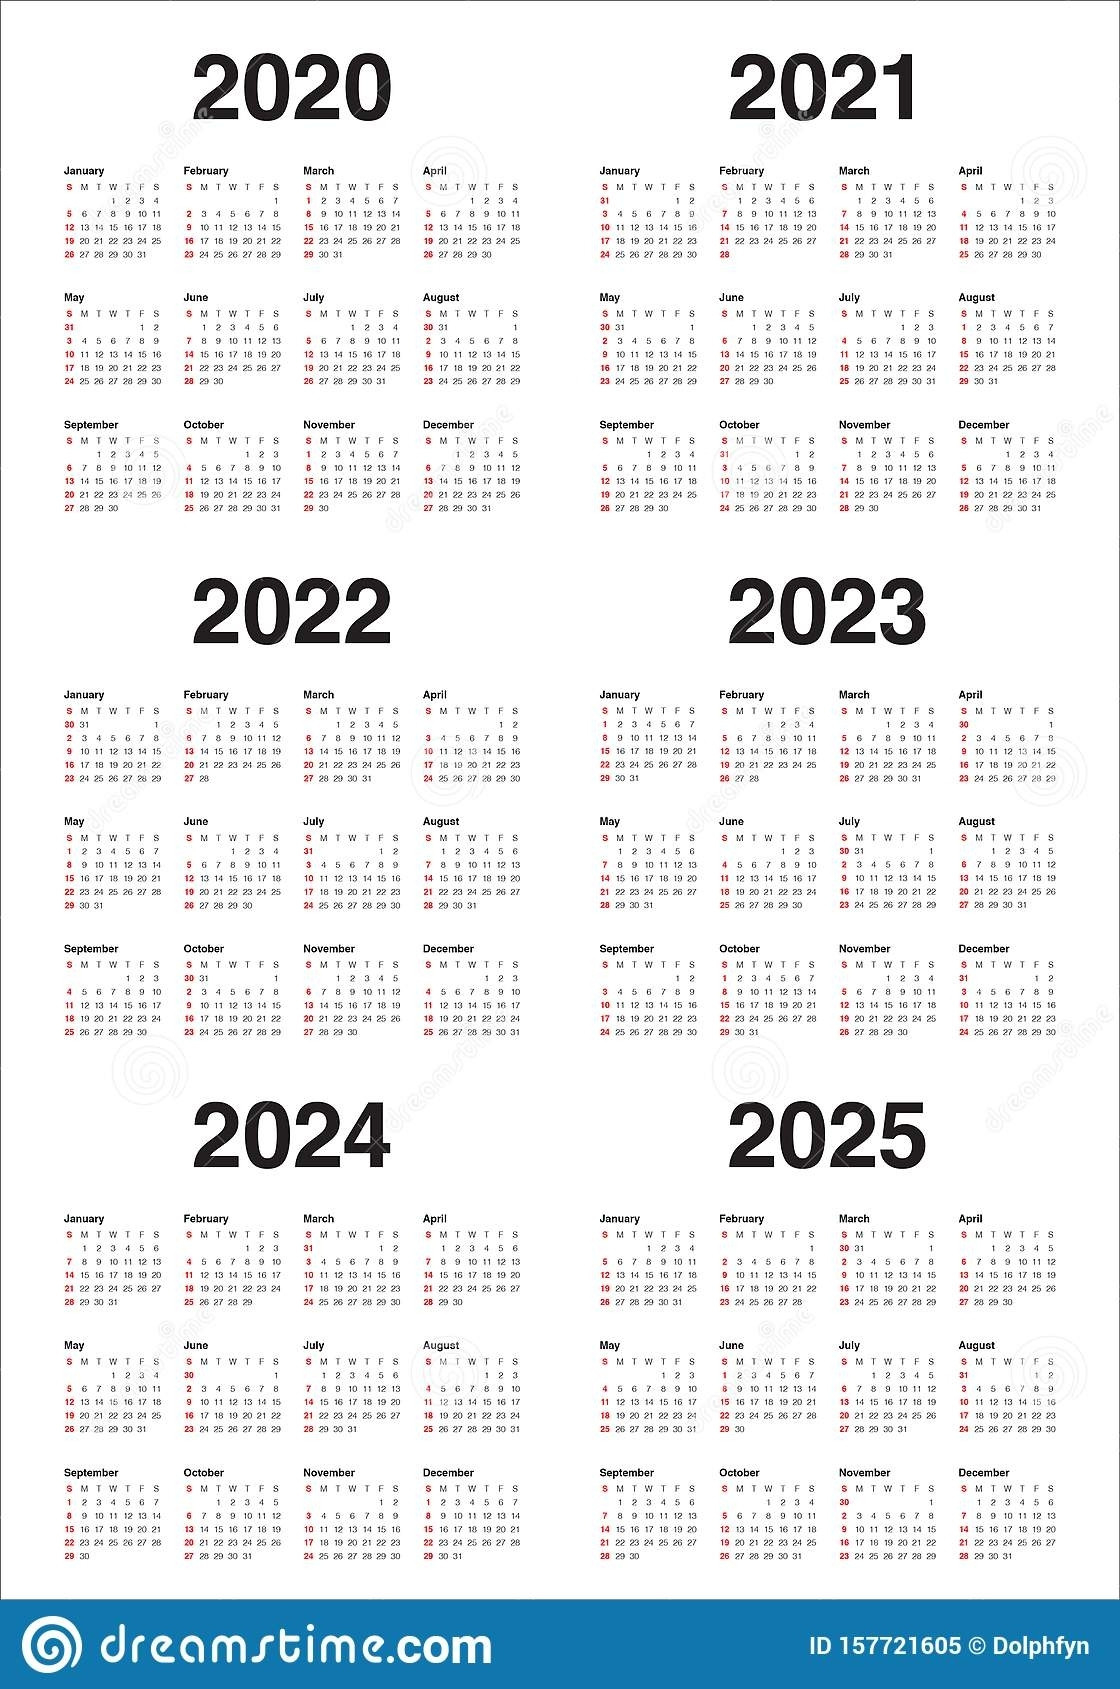 Printable 3 Year Calendars 2021 2022 2023 | Ten Free  Calendar For 2022 And 2023